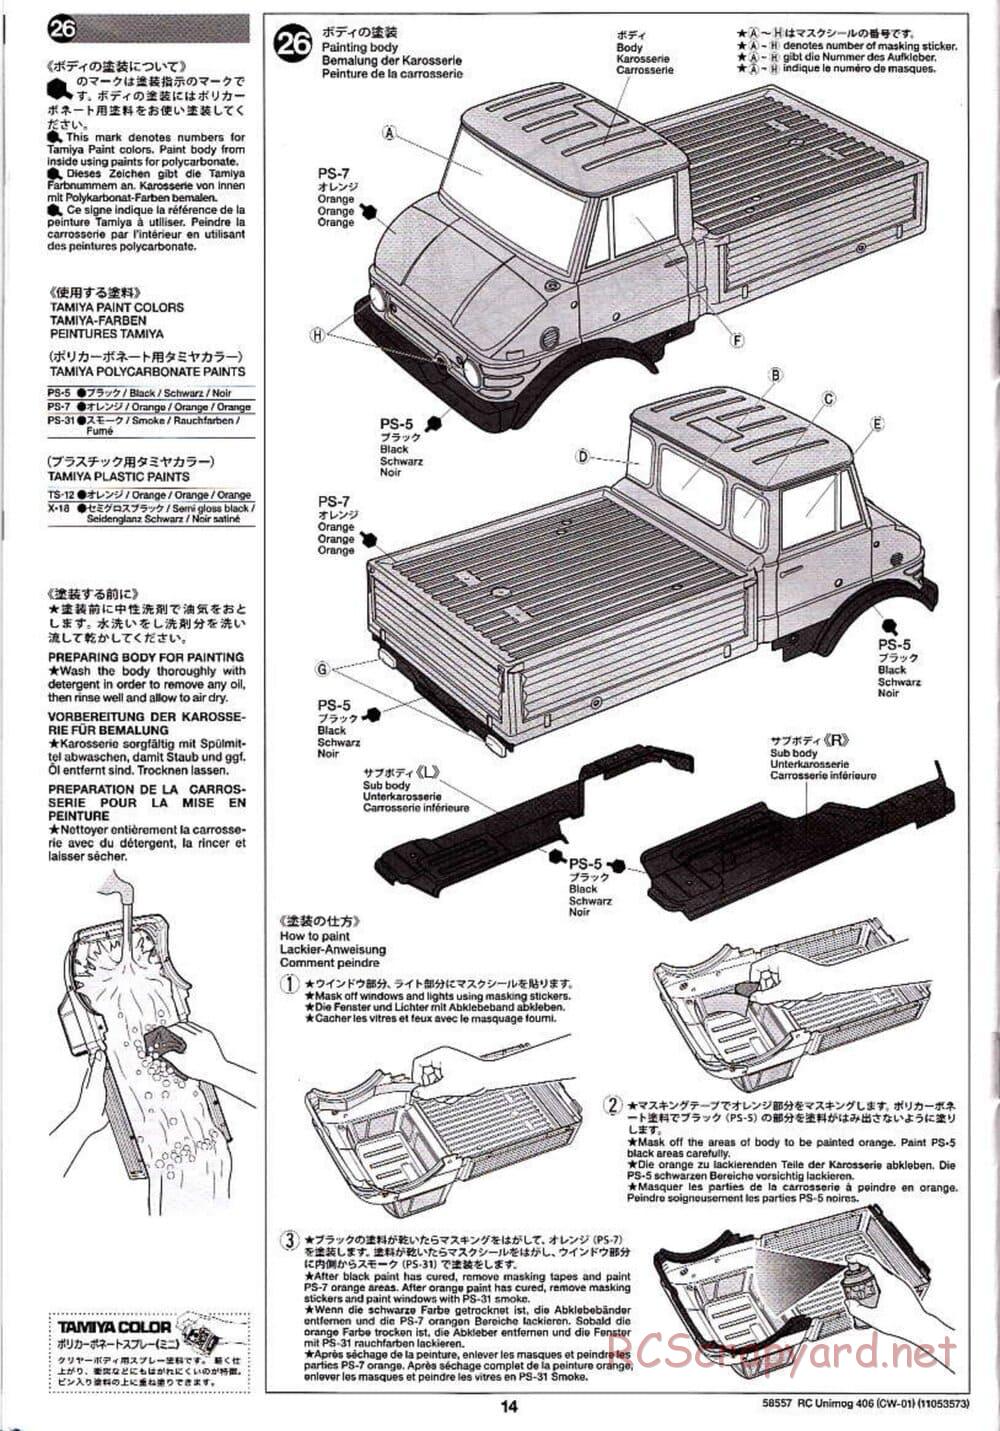 Tamiya - Mercedes-Benz Unimog 406 Series U900 - CW-01 Chassis - Manual - Page 14